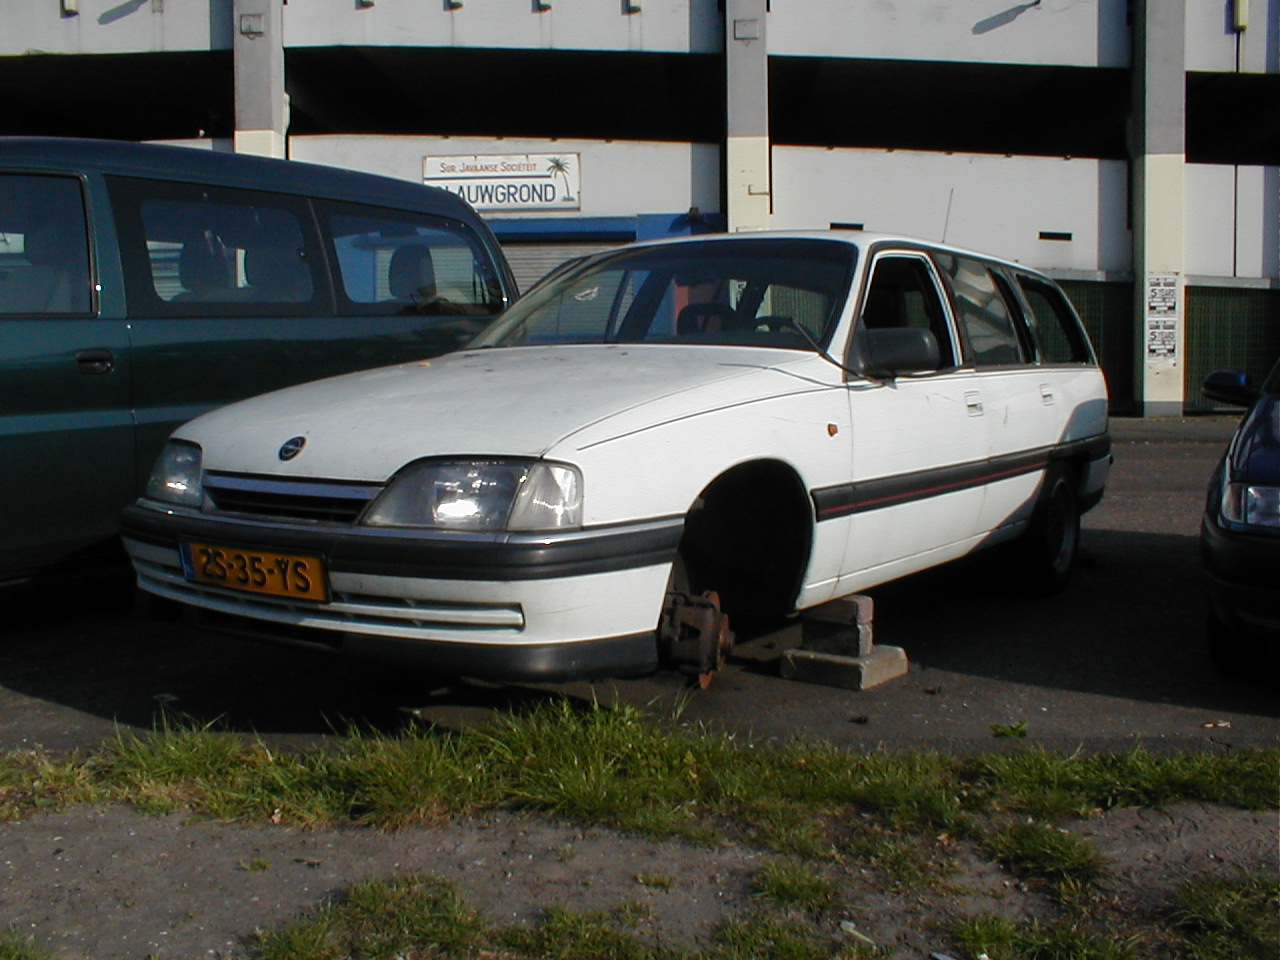 dario vehicles land white wheel missing stolen opel car burglared parked nicked tire